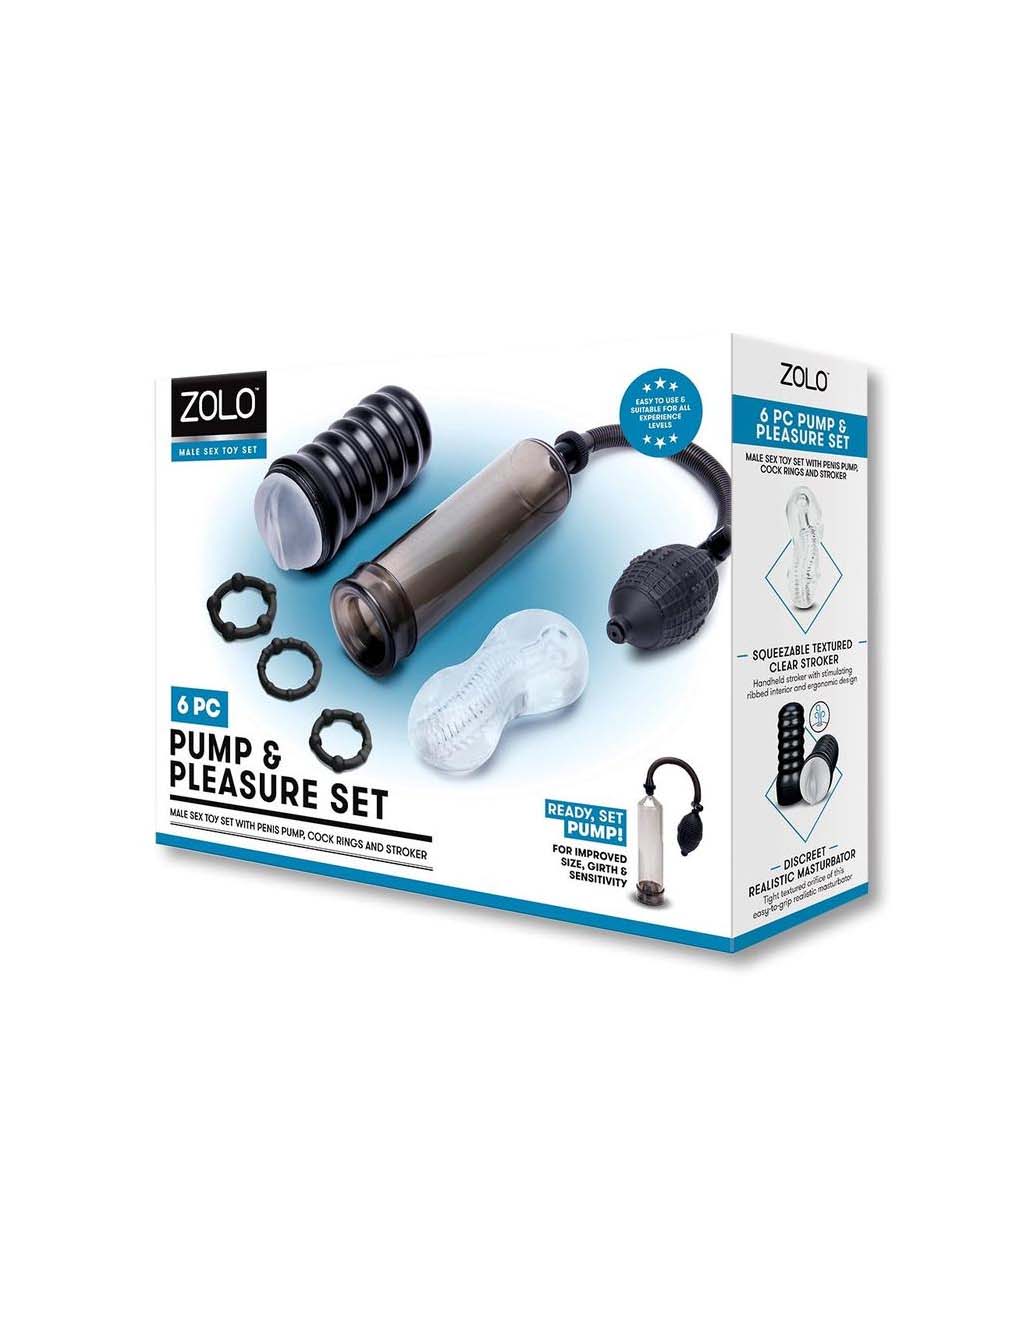 Zolo Pump & Pleasure Set - Box